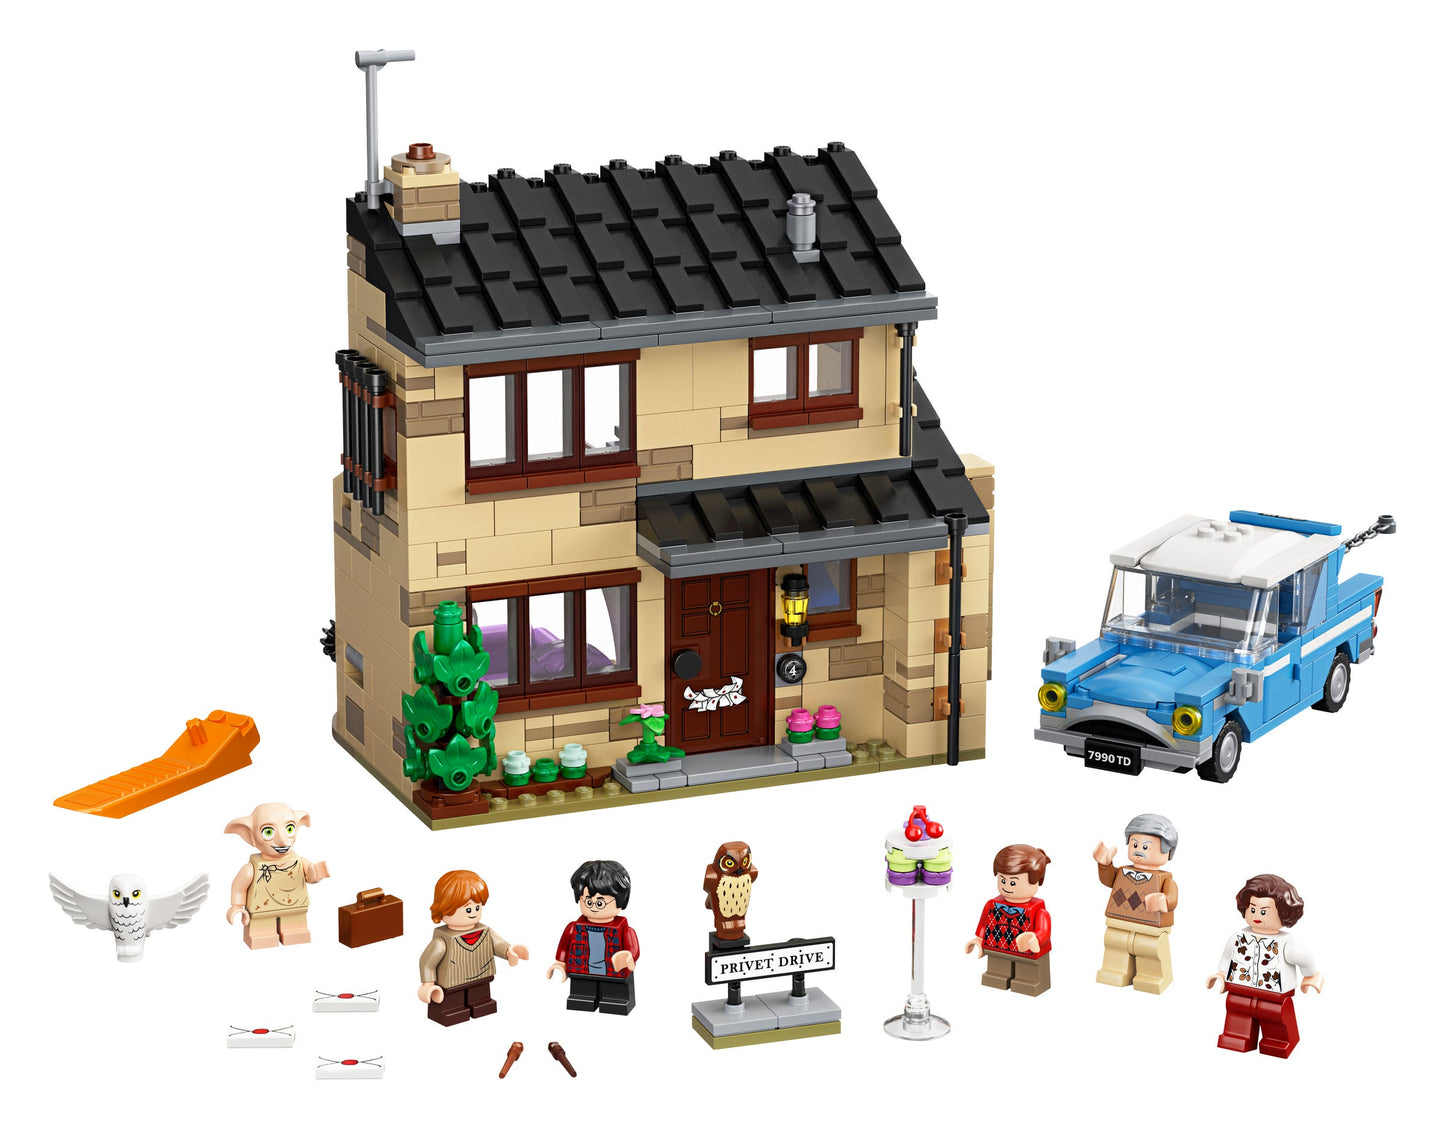 LEGO Harry Potter 4 Privet Drive 75968